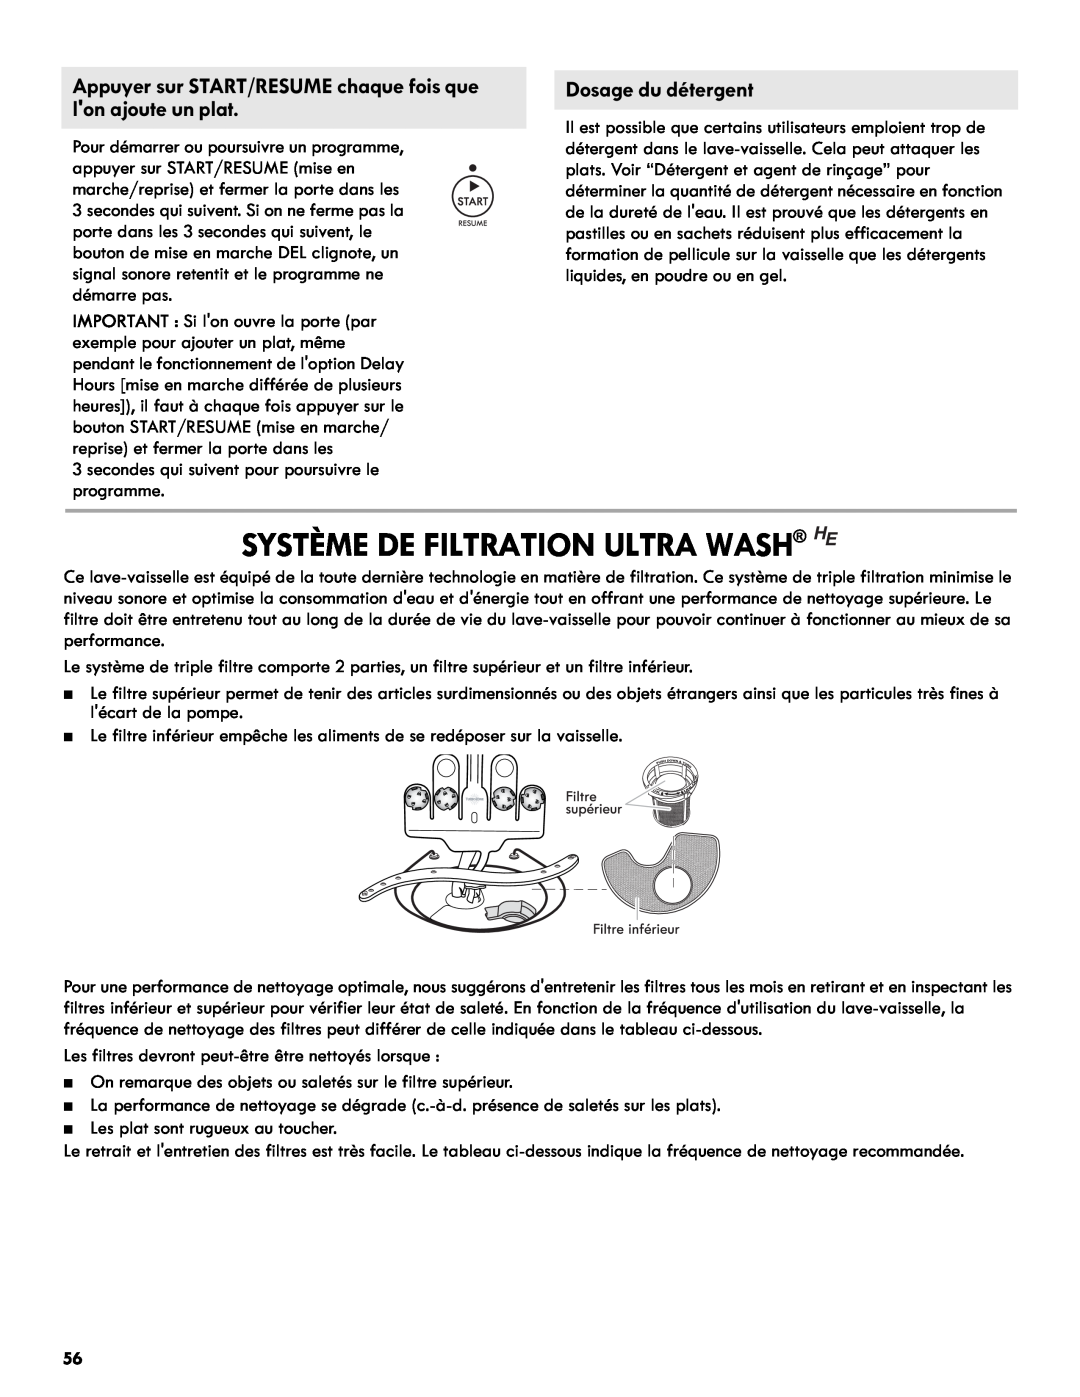 Kenmore 665.1301 manual Système De Filtration Ultra Wash He, Dosage du détergent 